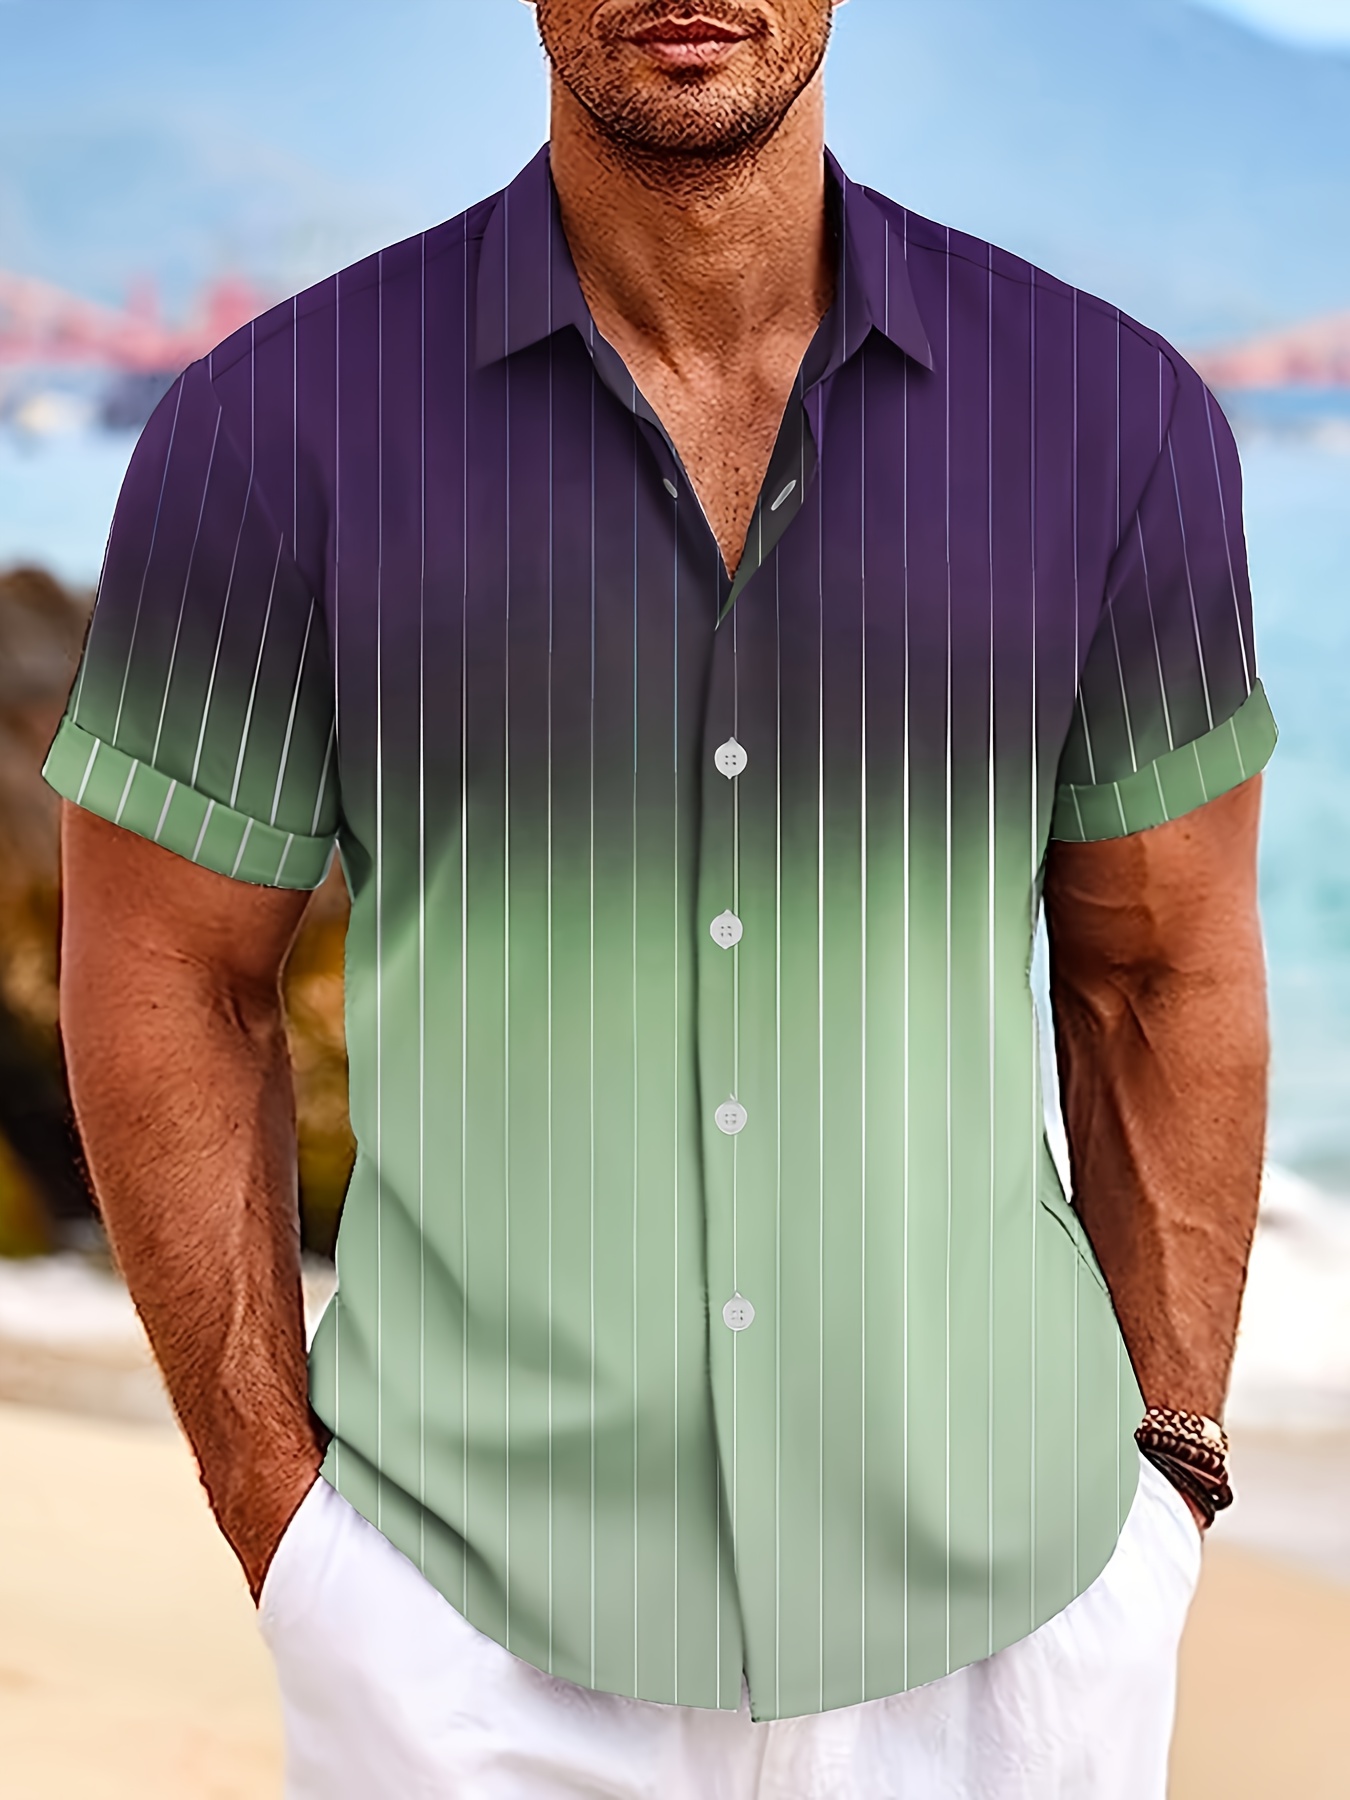 Men's Short Sleeve Button Down Shirt - Gradient and Strip Digital Print for Summer Resort Vacation and Leisurewear